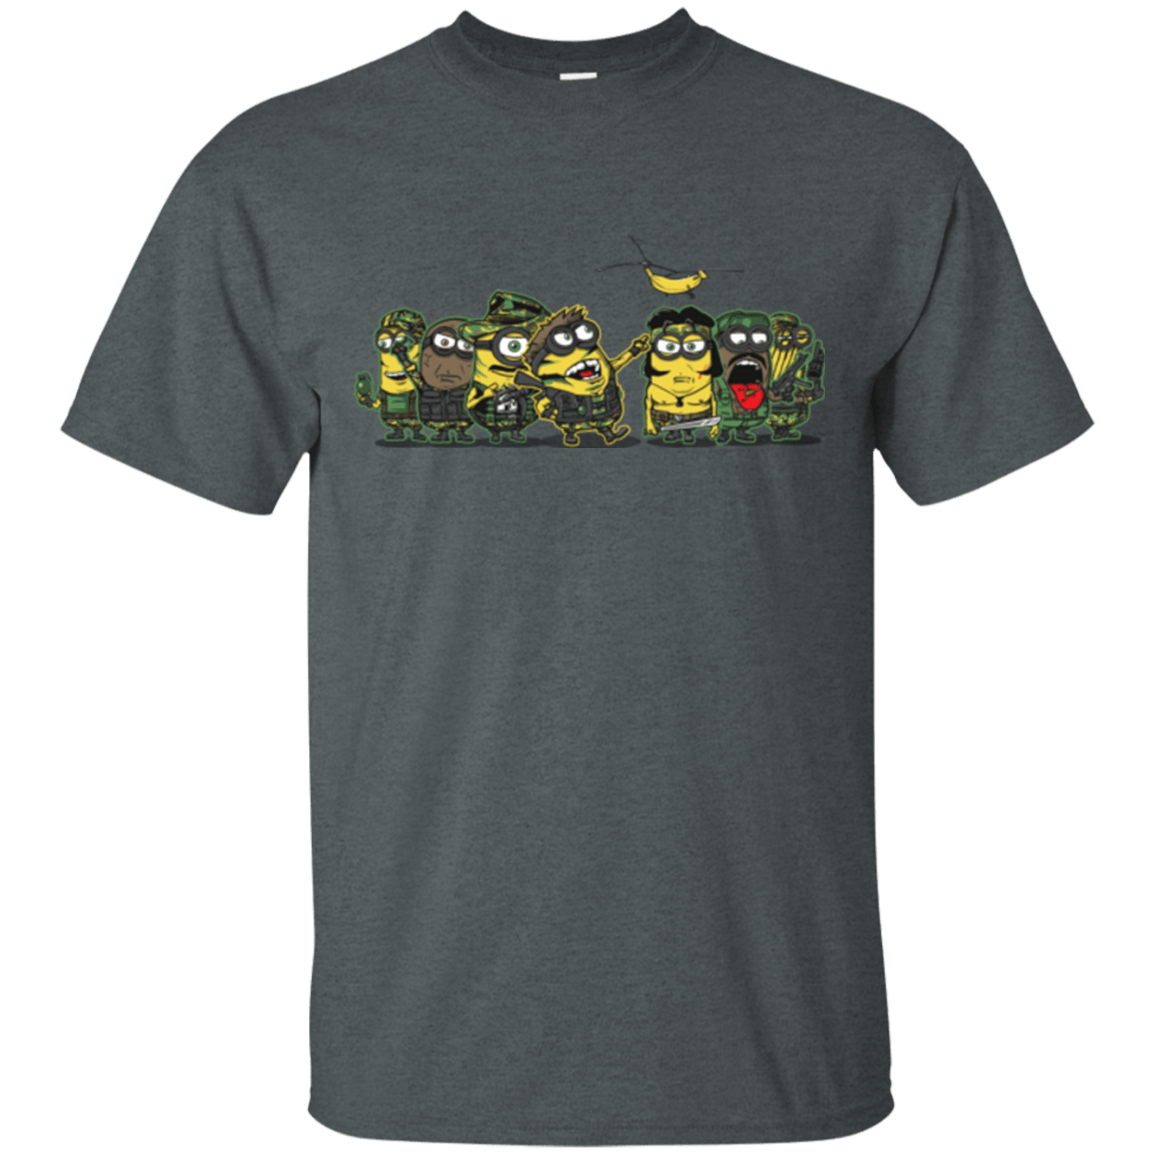 T-Shirts Dark Heather / Small Meat Grinder Platoon T-Shirt